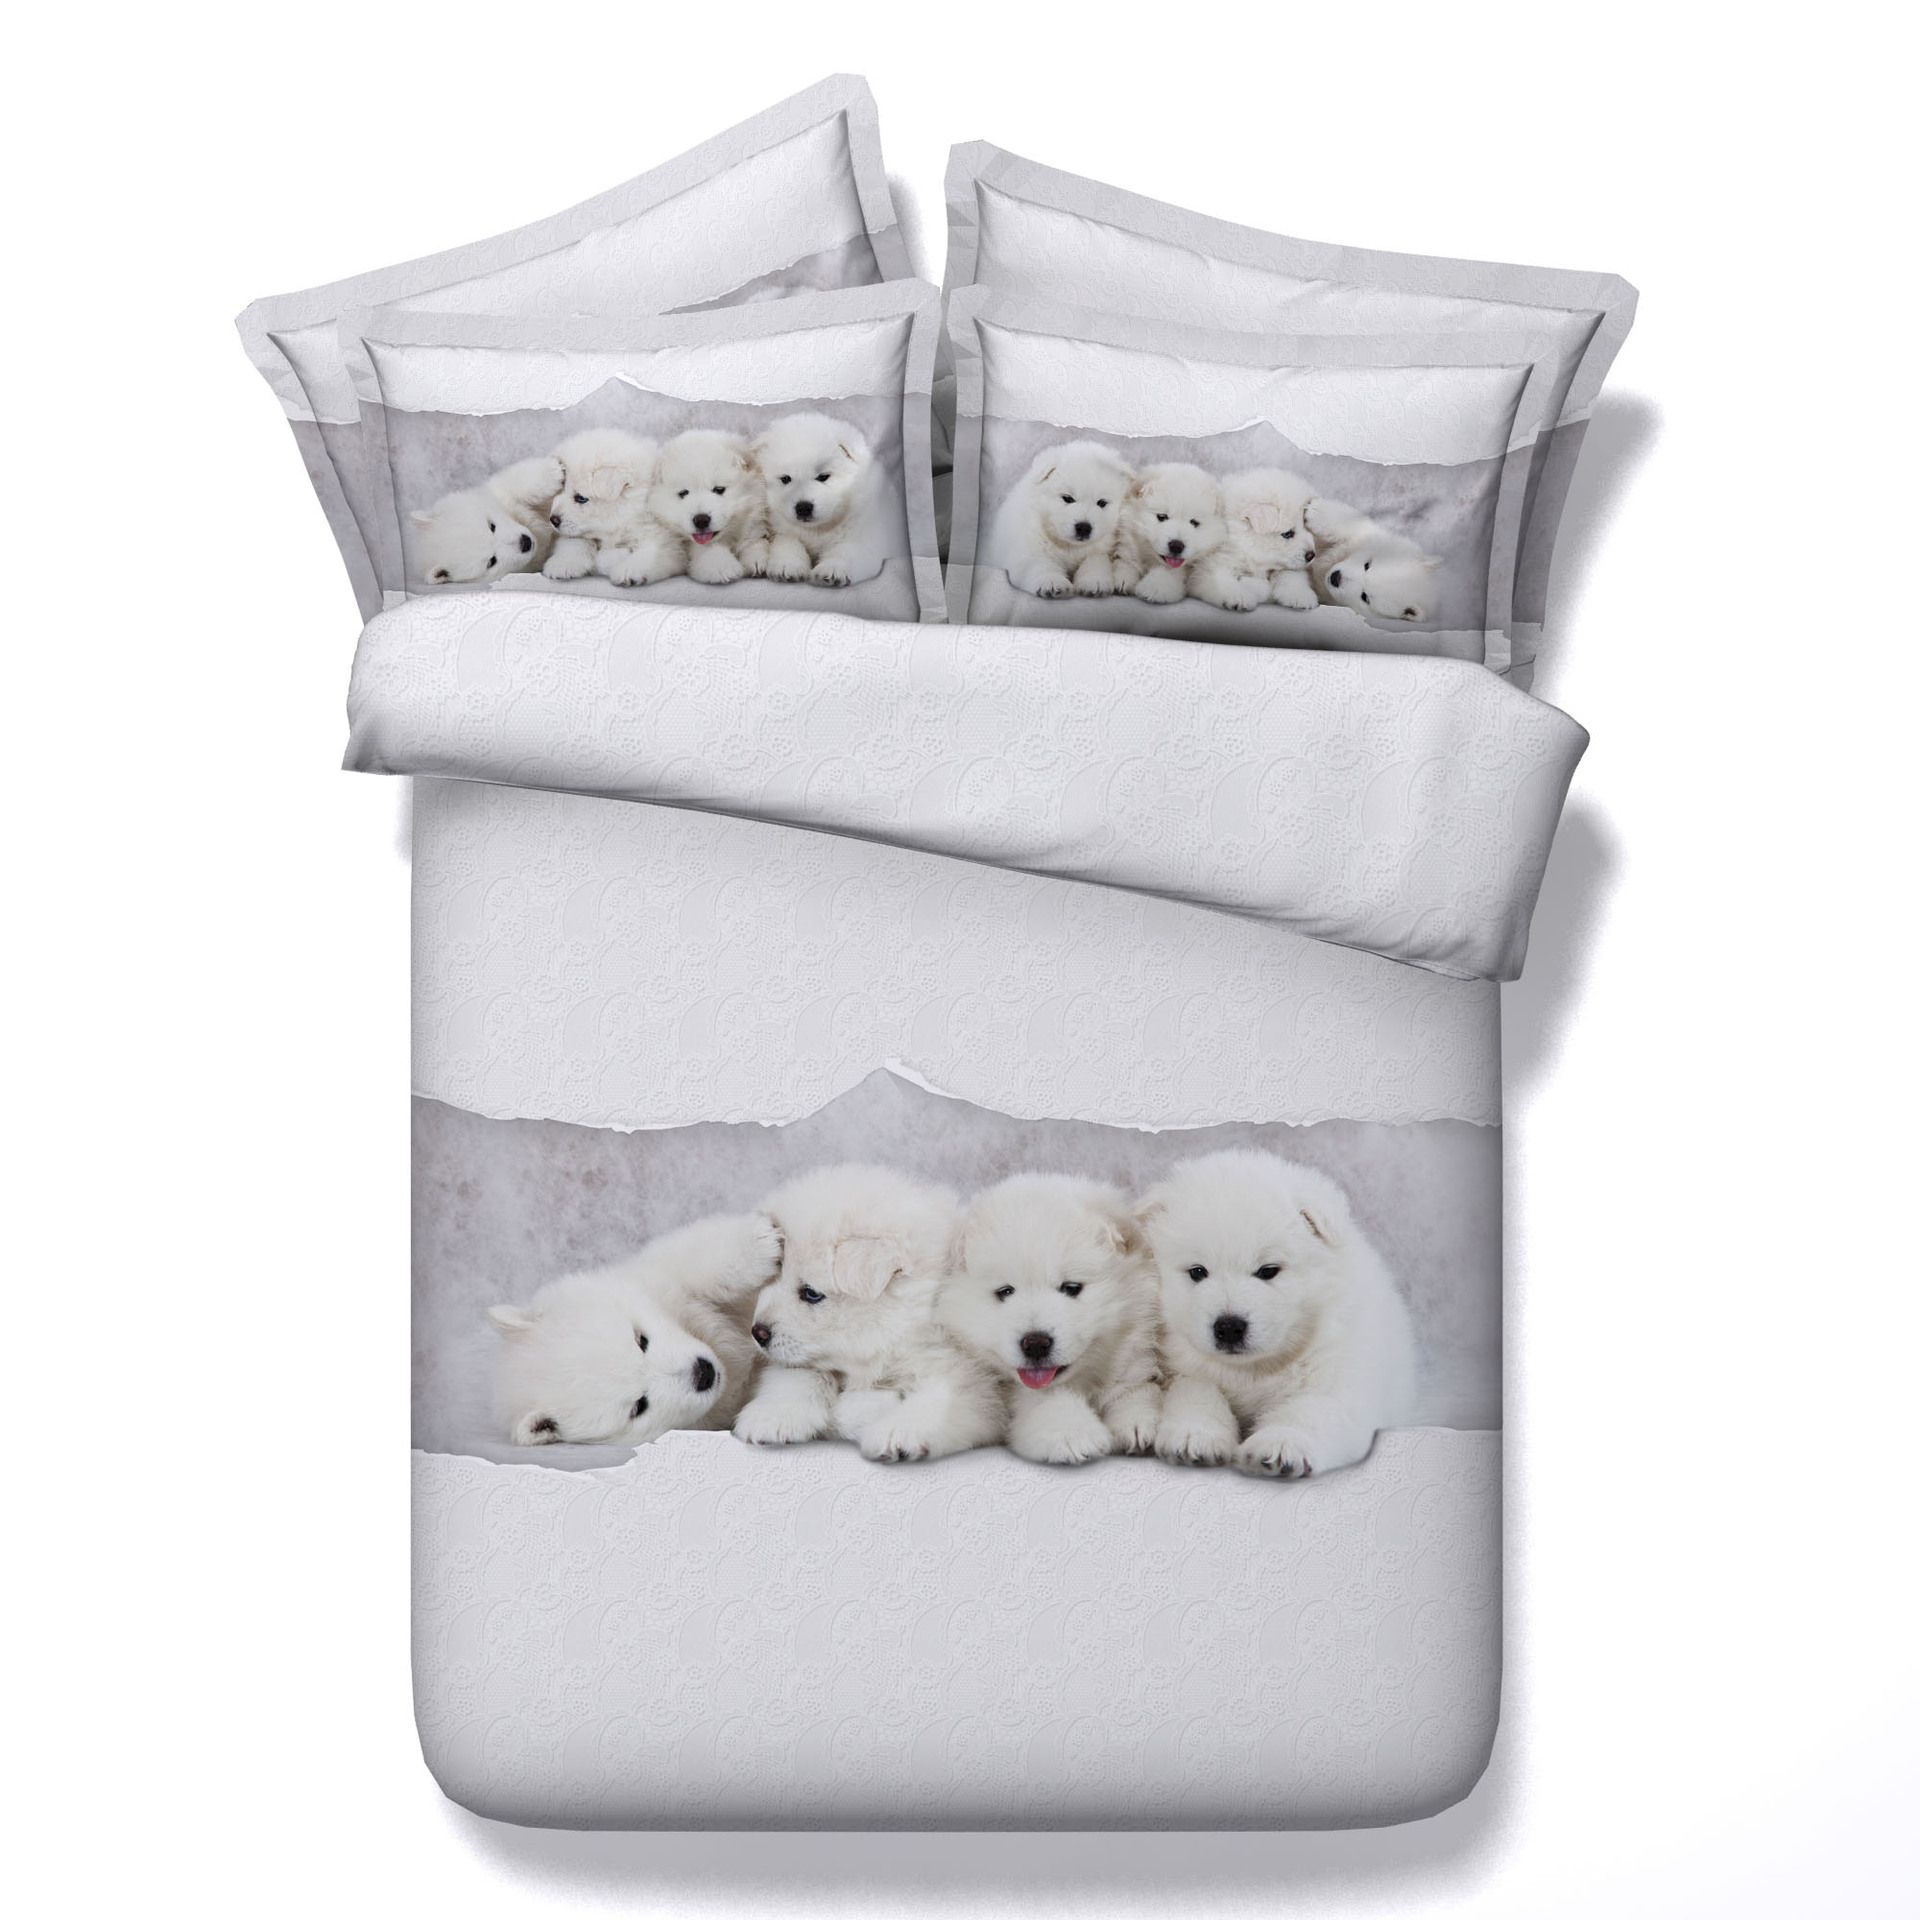 3d Adorable Bedding Sets Dog Duvet Cover Puppy Bedspreads White